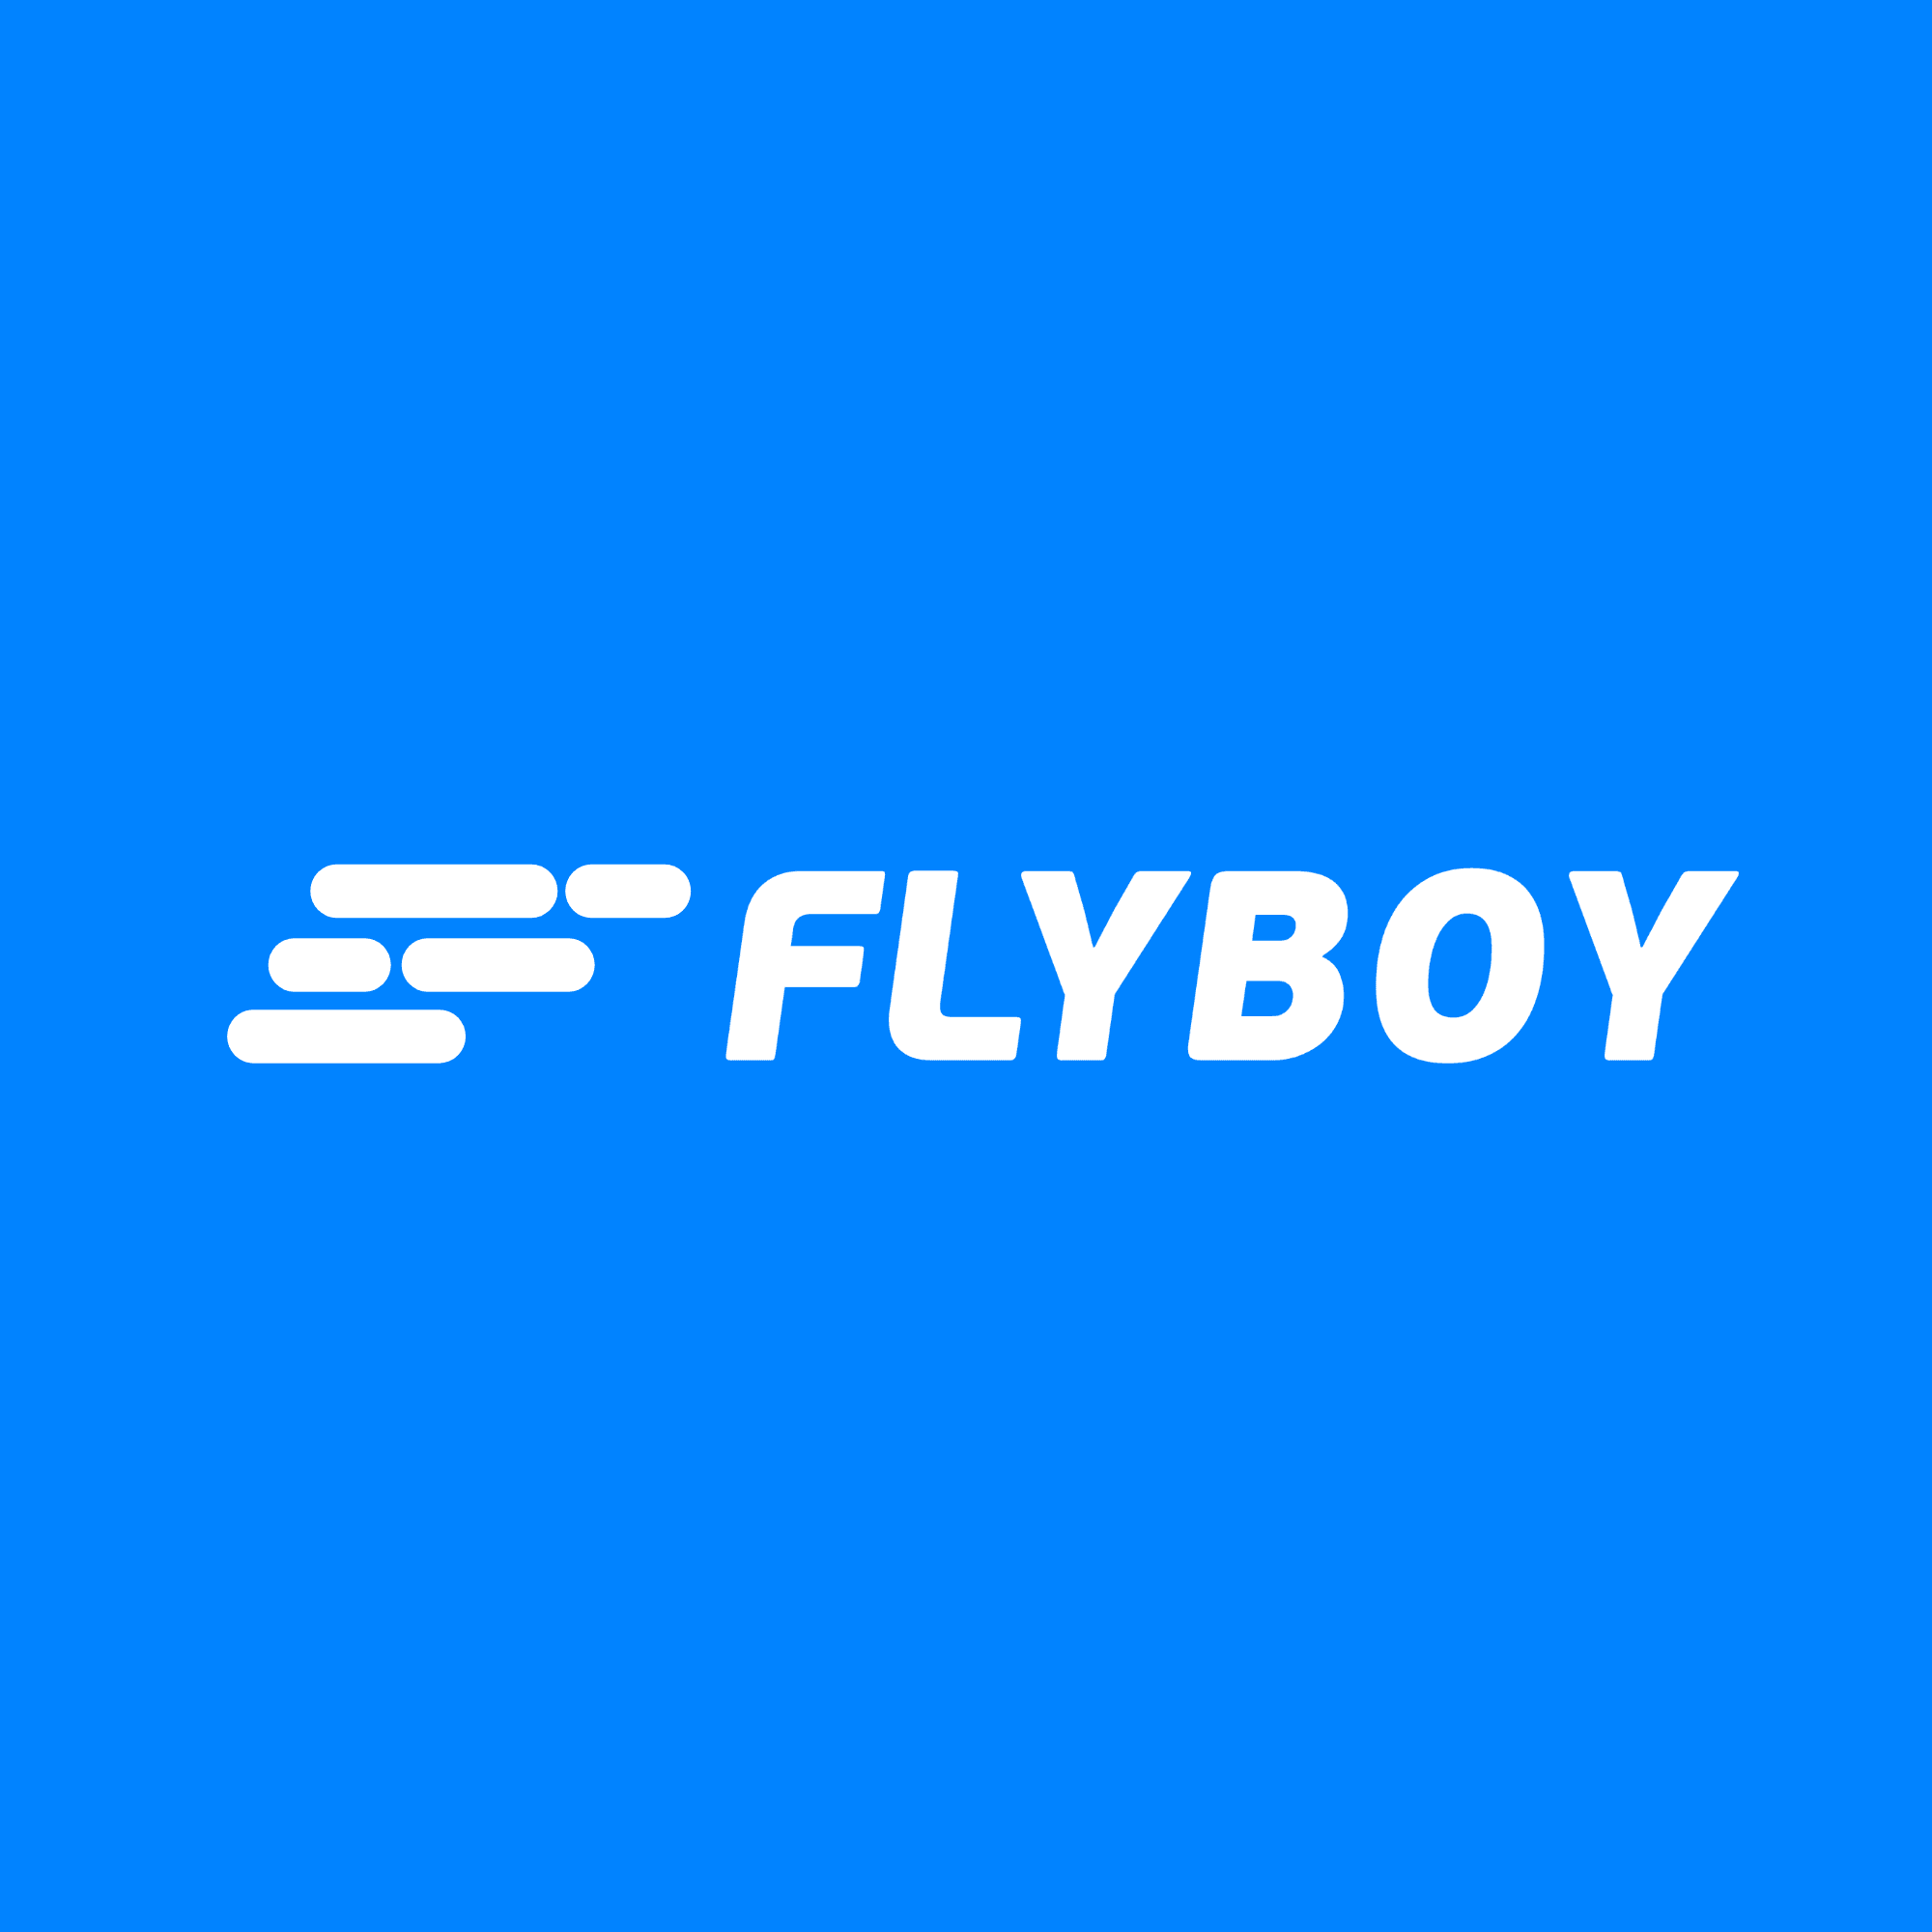 FlyBoys